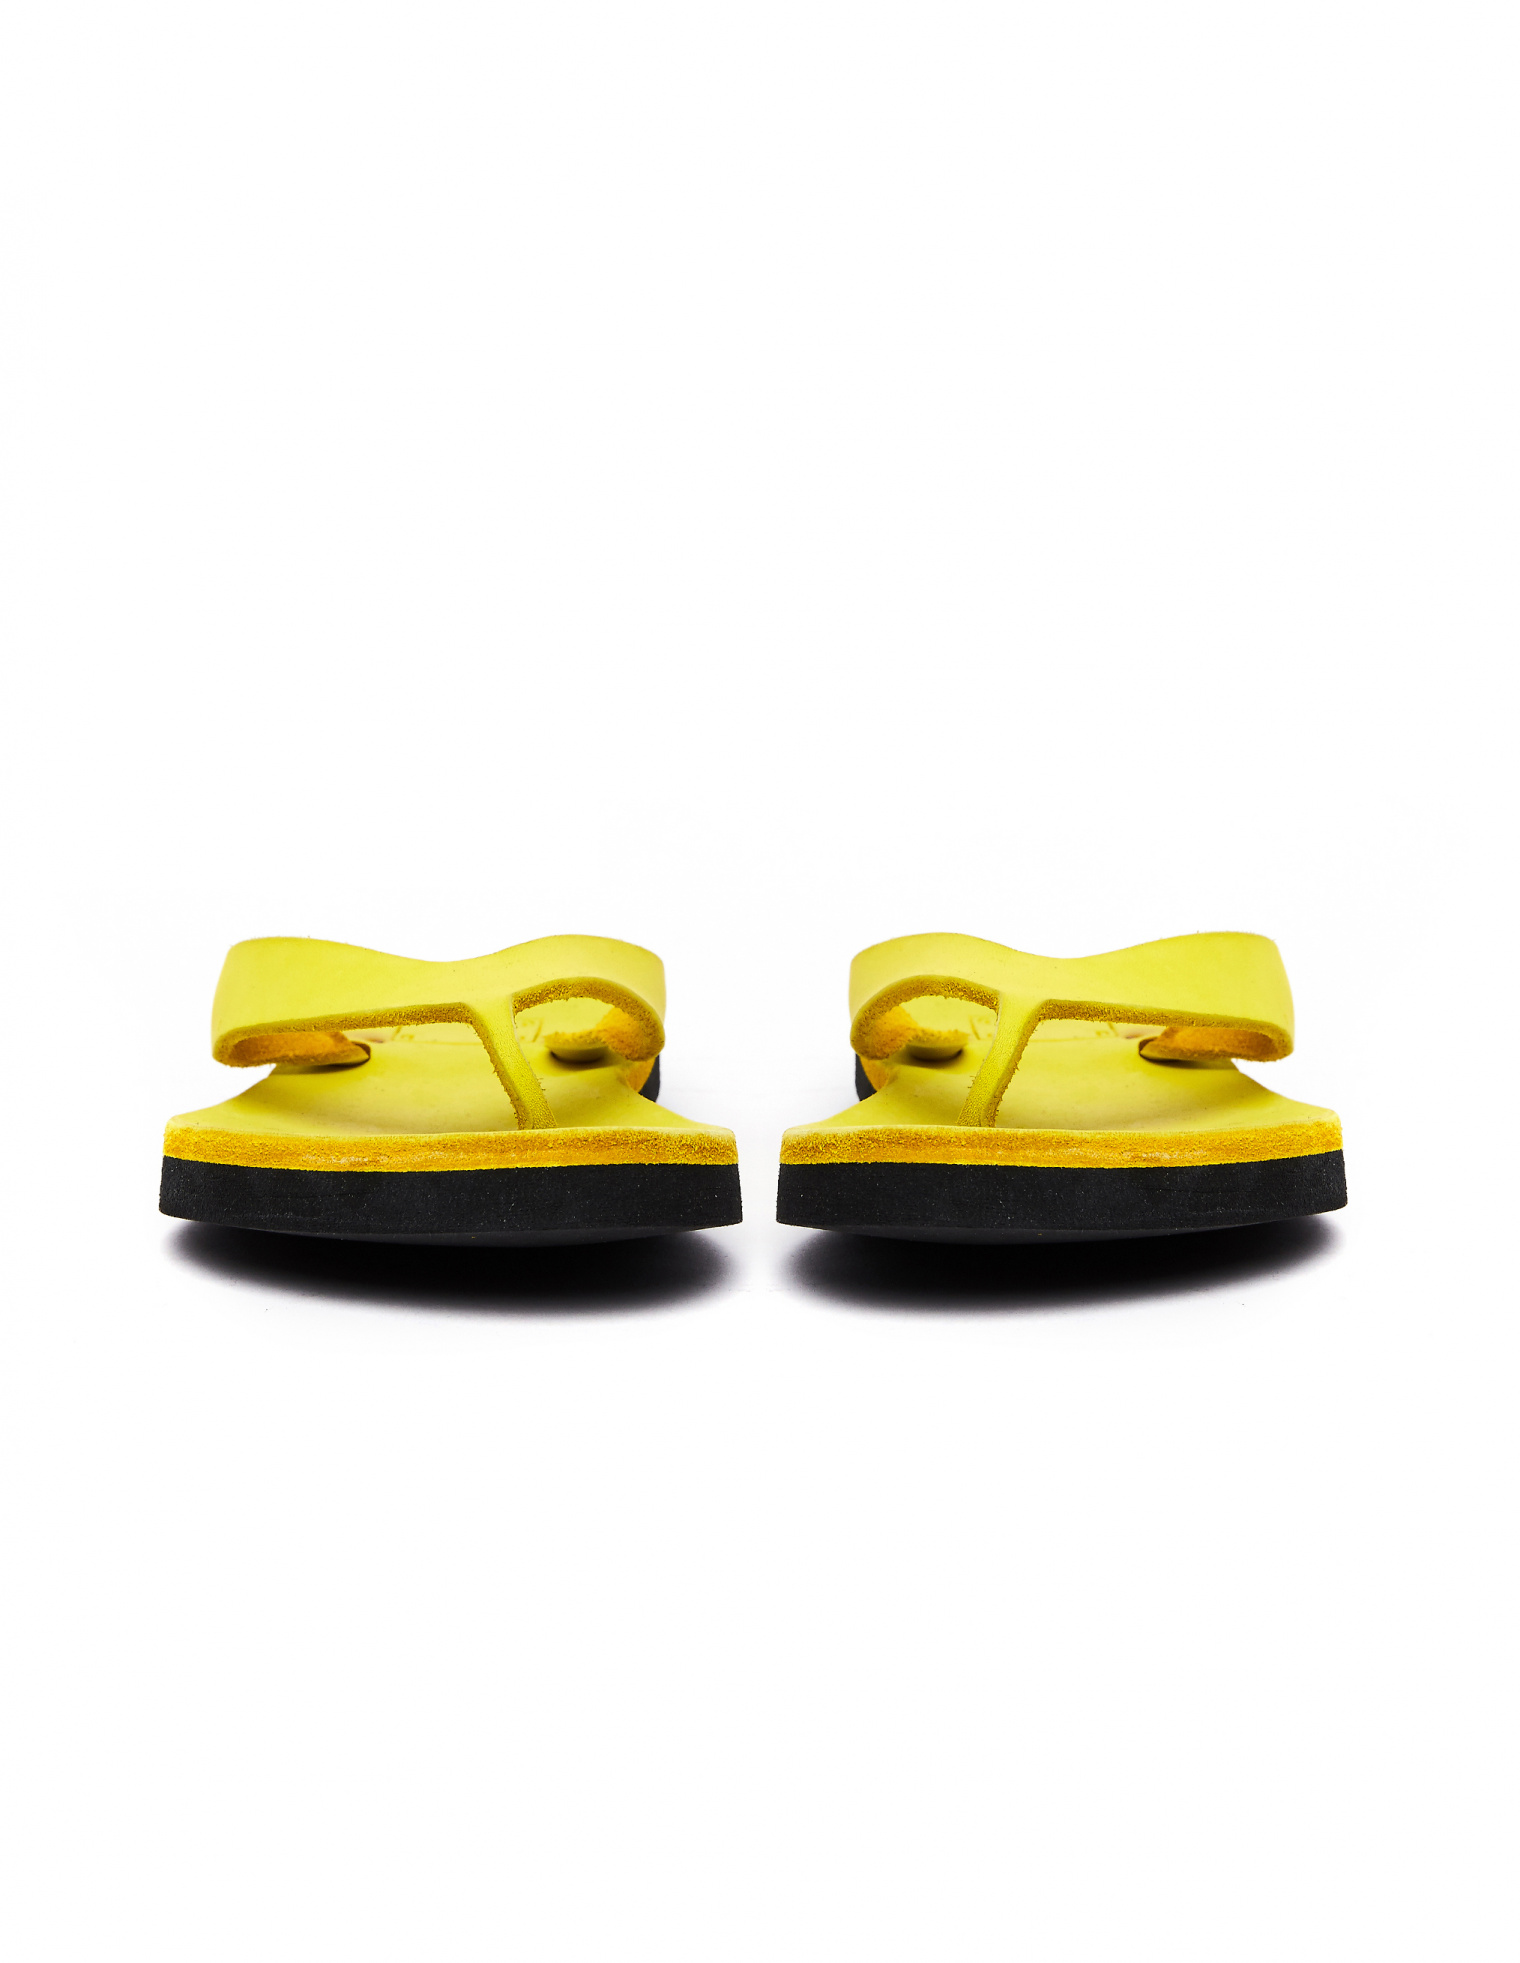 Guidi Yellow Leather Flip Flops